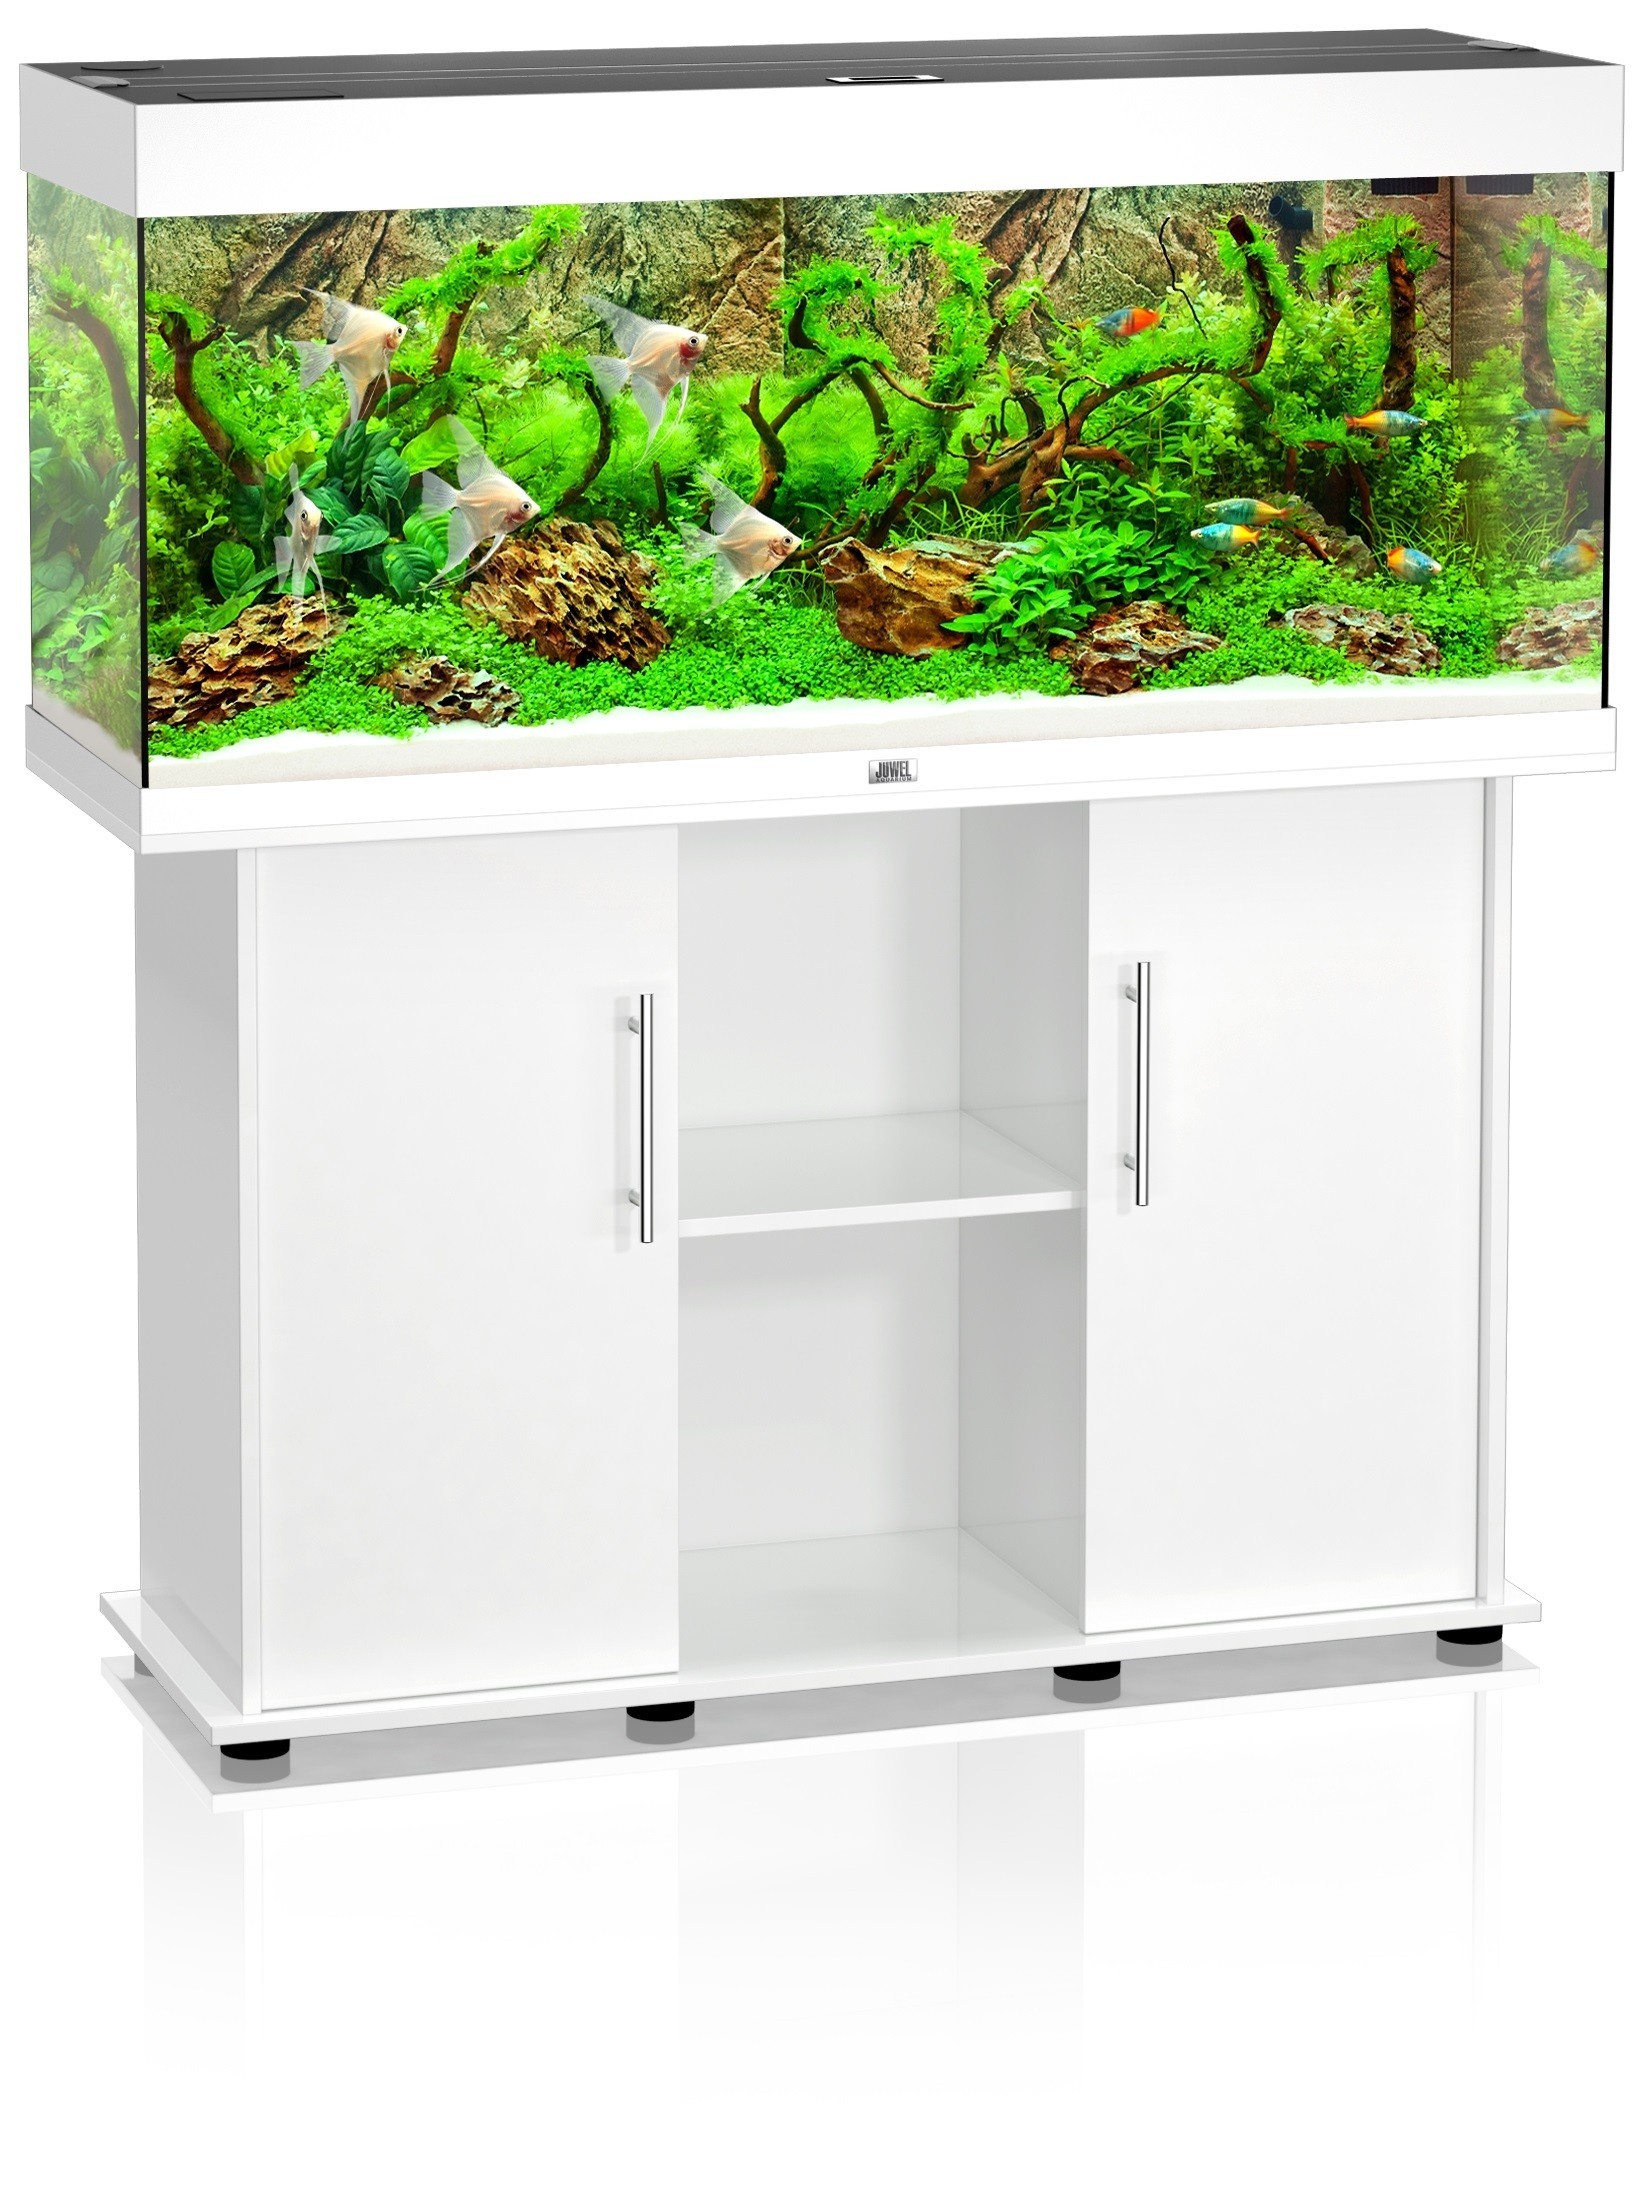 Aquarium Juwel Rio 240 blanc + meuble